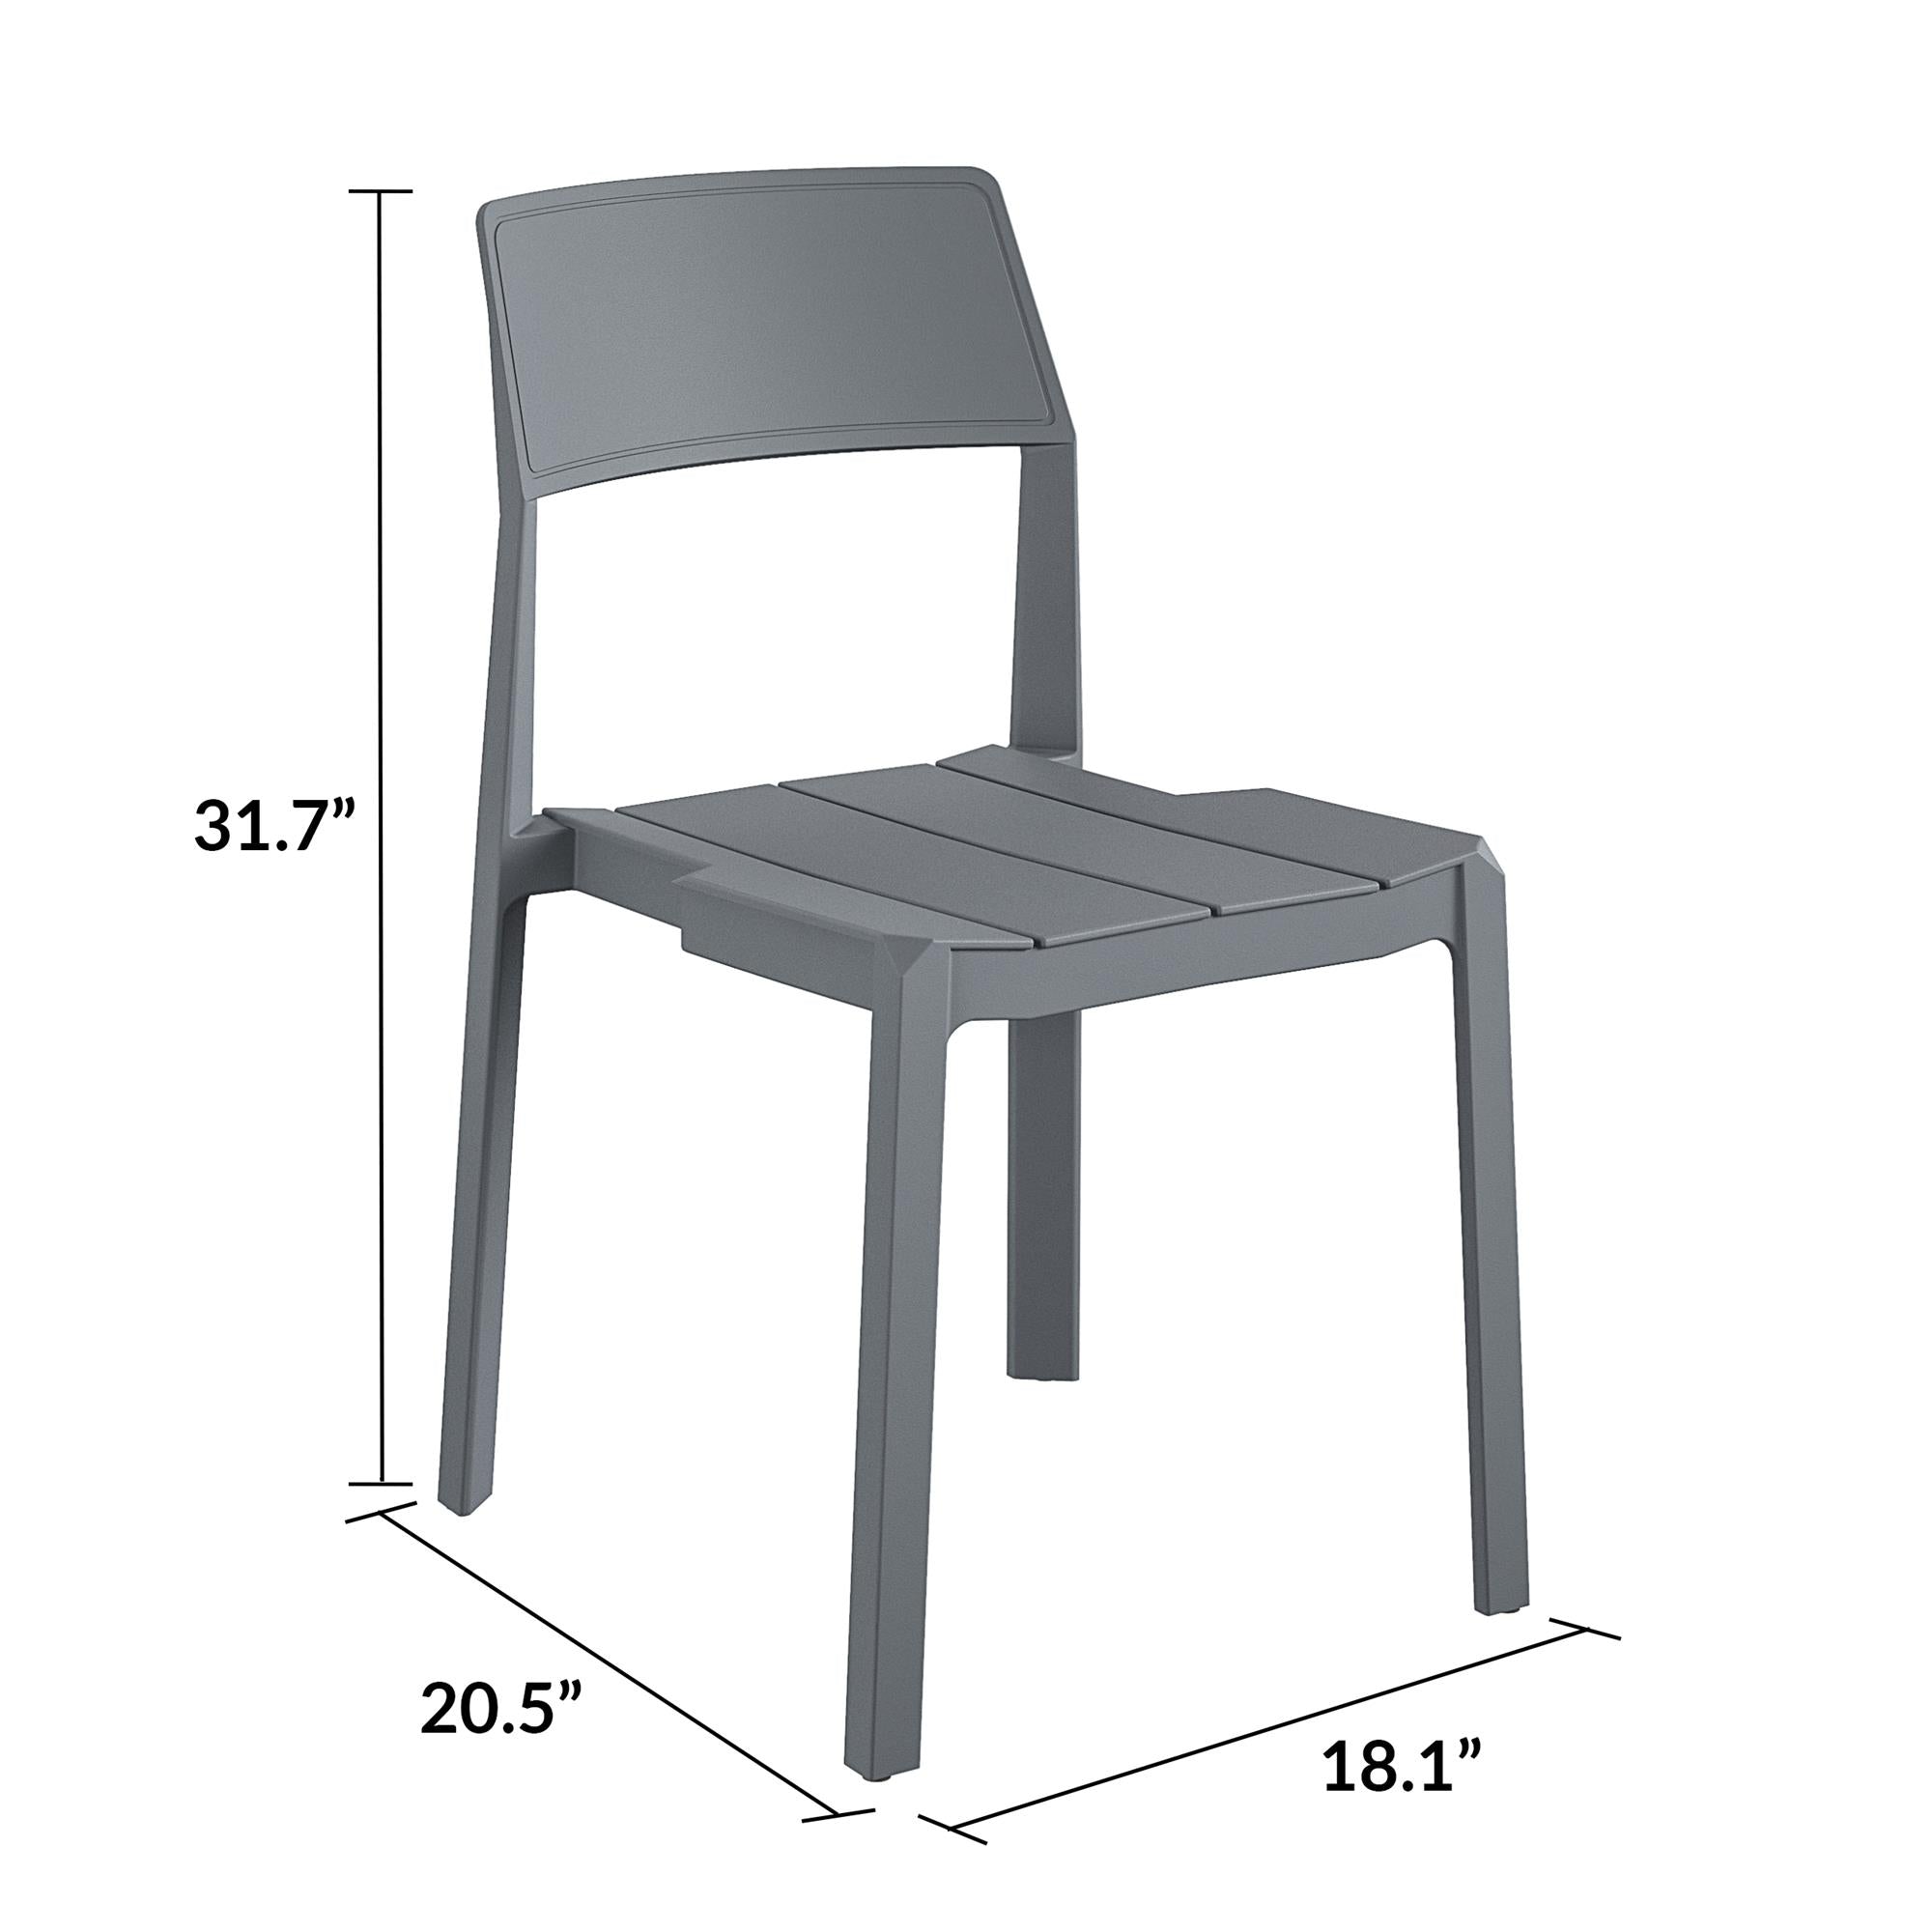 Chandler Stacking Chairs (Set of 2) – The Novogratz